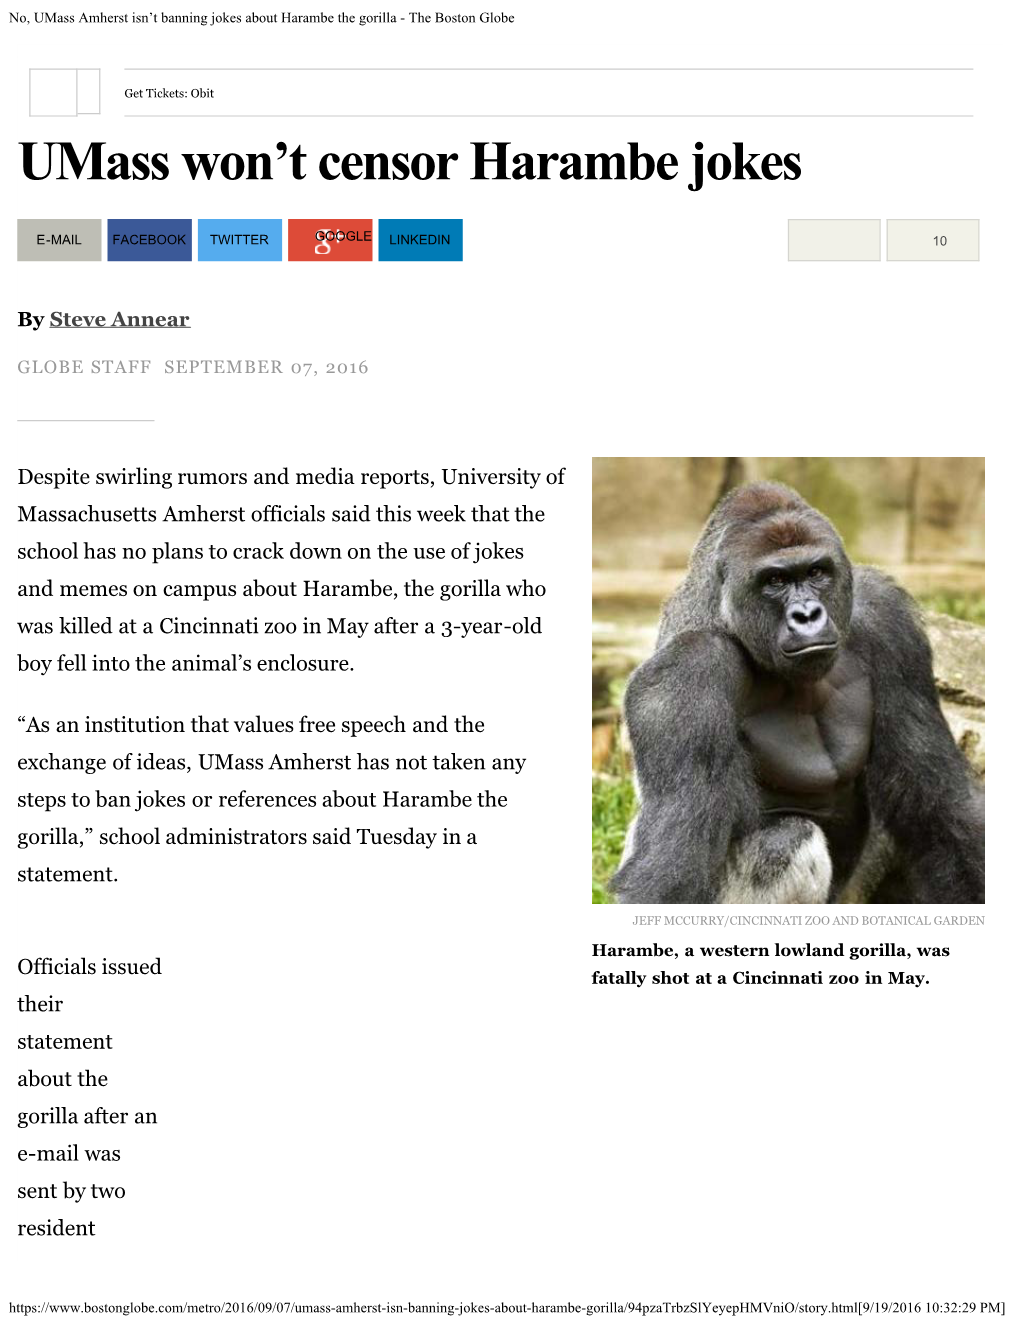 No, Umass Amherst Isn't Banning Jokes About Harambe the Gorilla